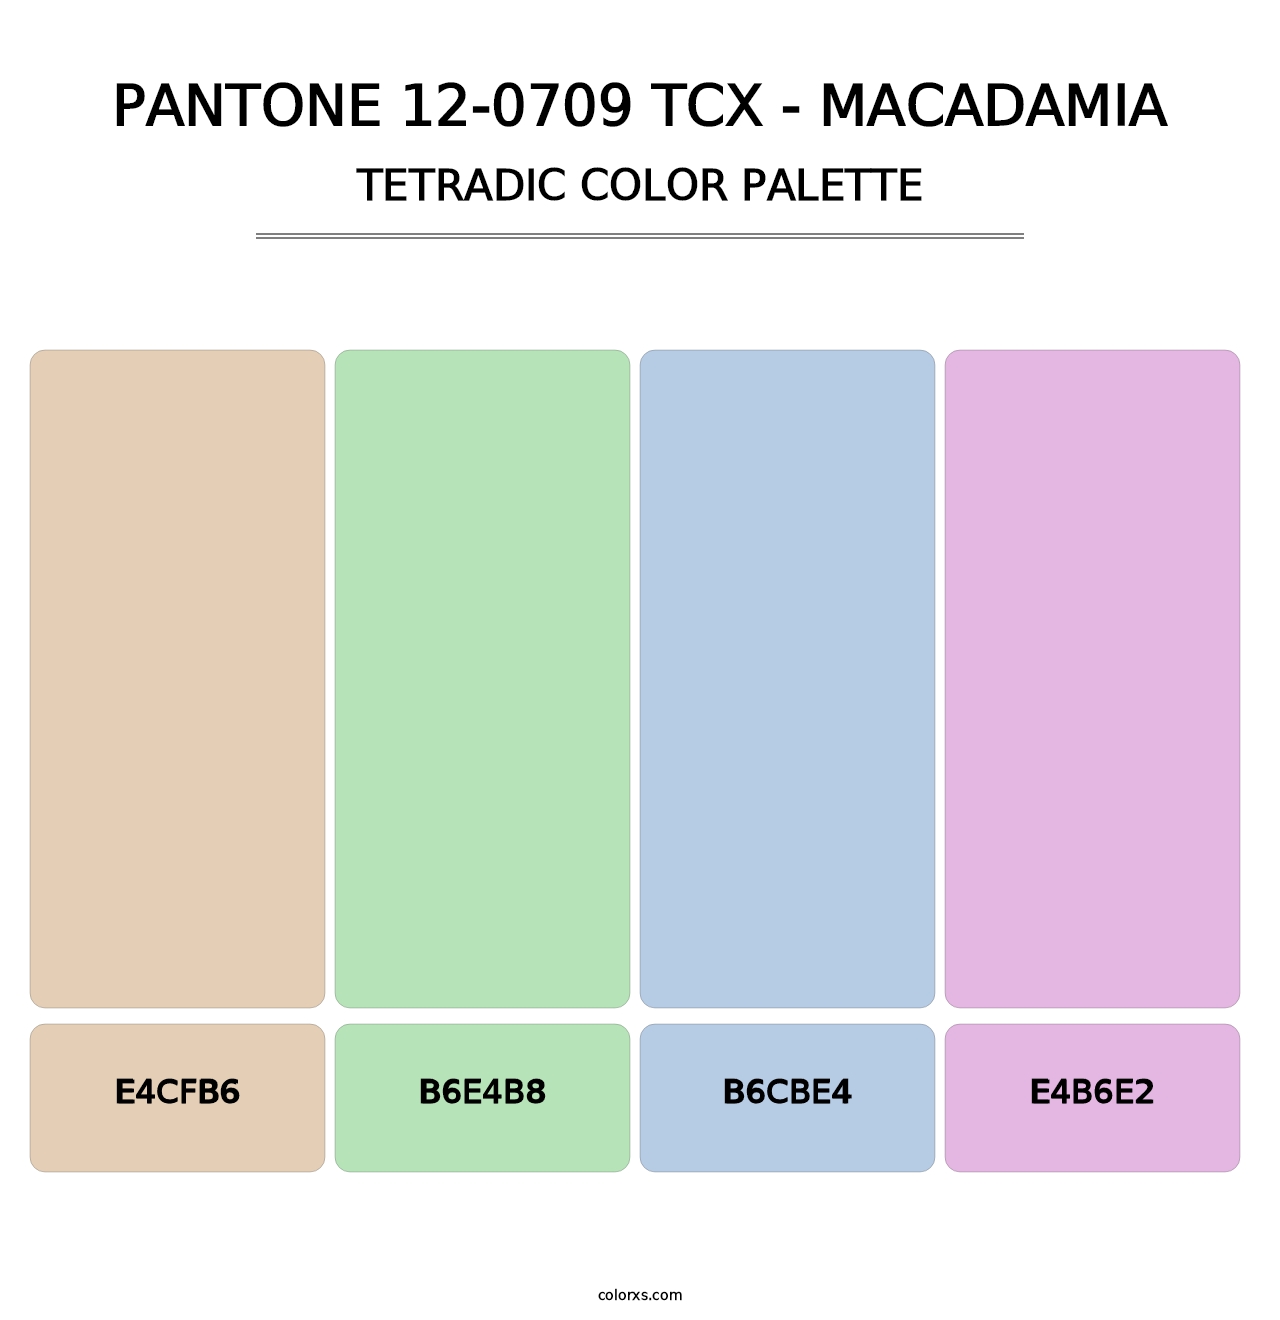 PANTONE 12-0709 TCX - Macadamia - Tetradic Color Palette